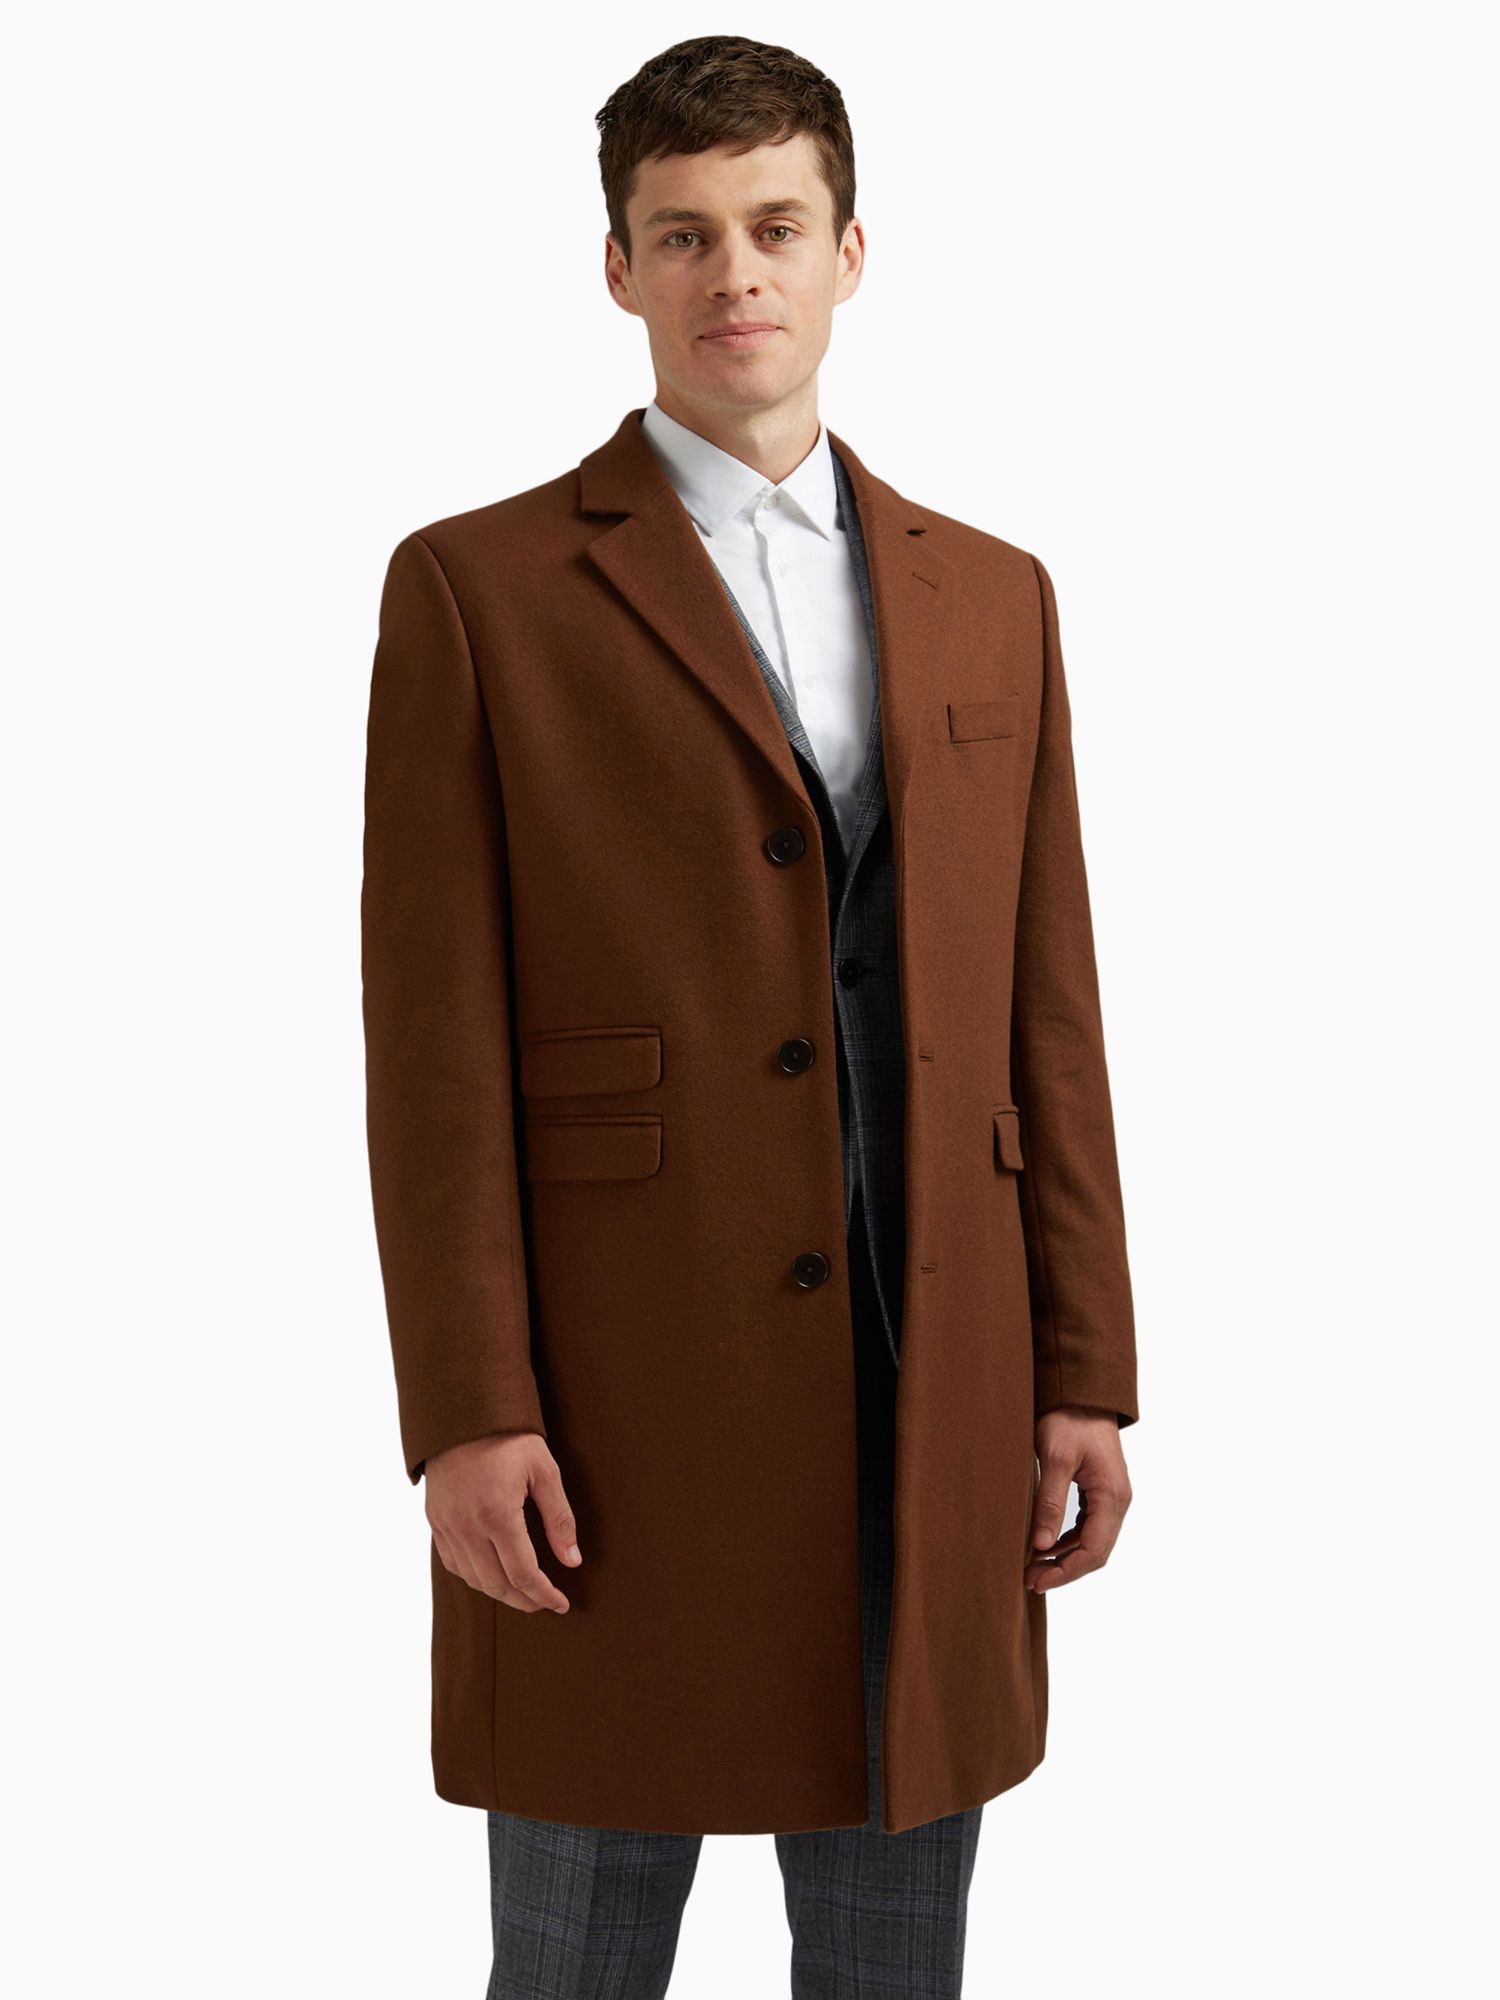 Ted Baker Wool Blend Overcoat, Dark Tan, 42R